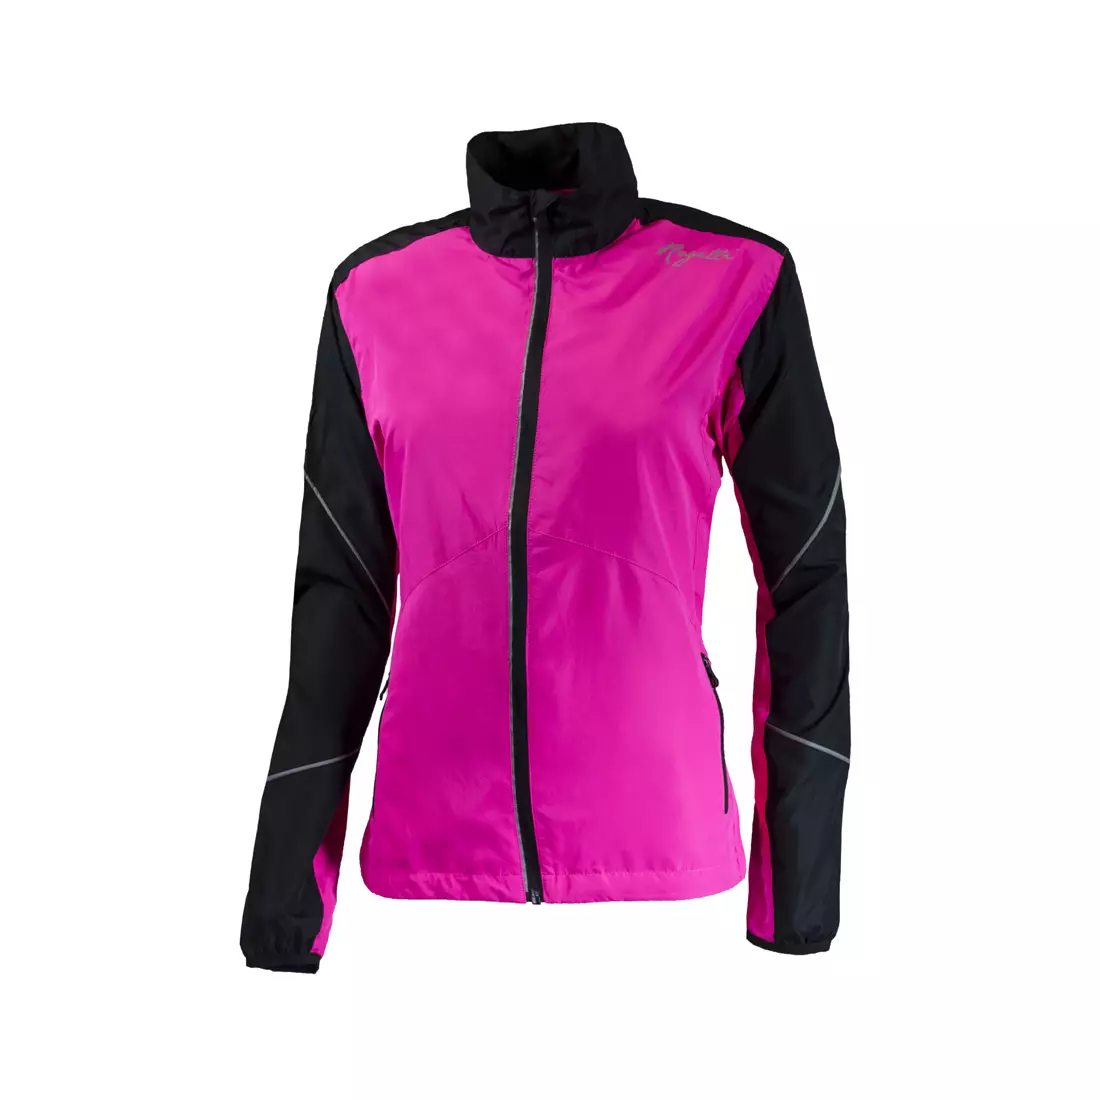 ROGELLI RUN 840.862 VISION 2.0 women's running jacket, pink